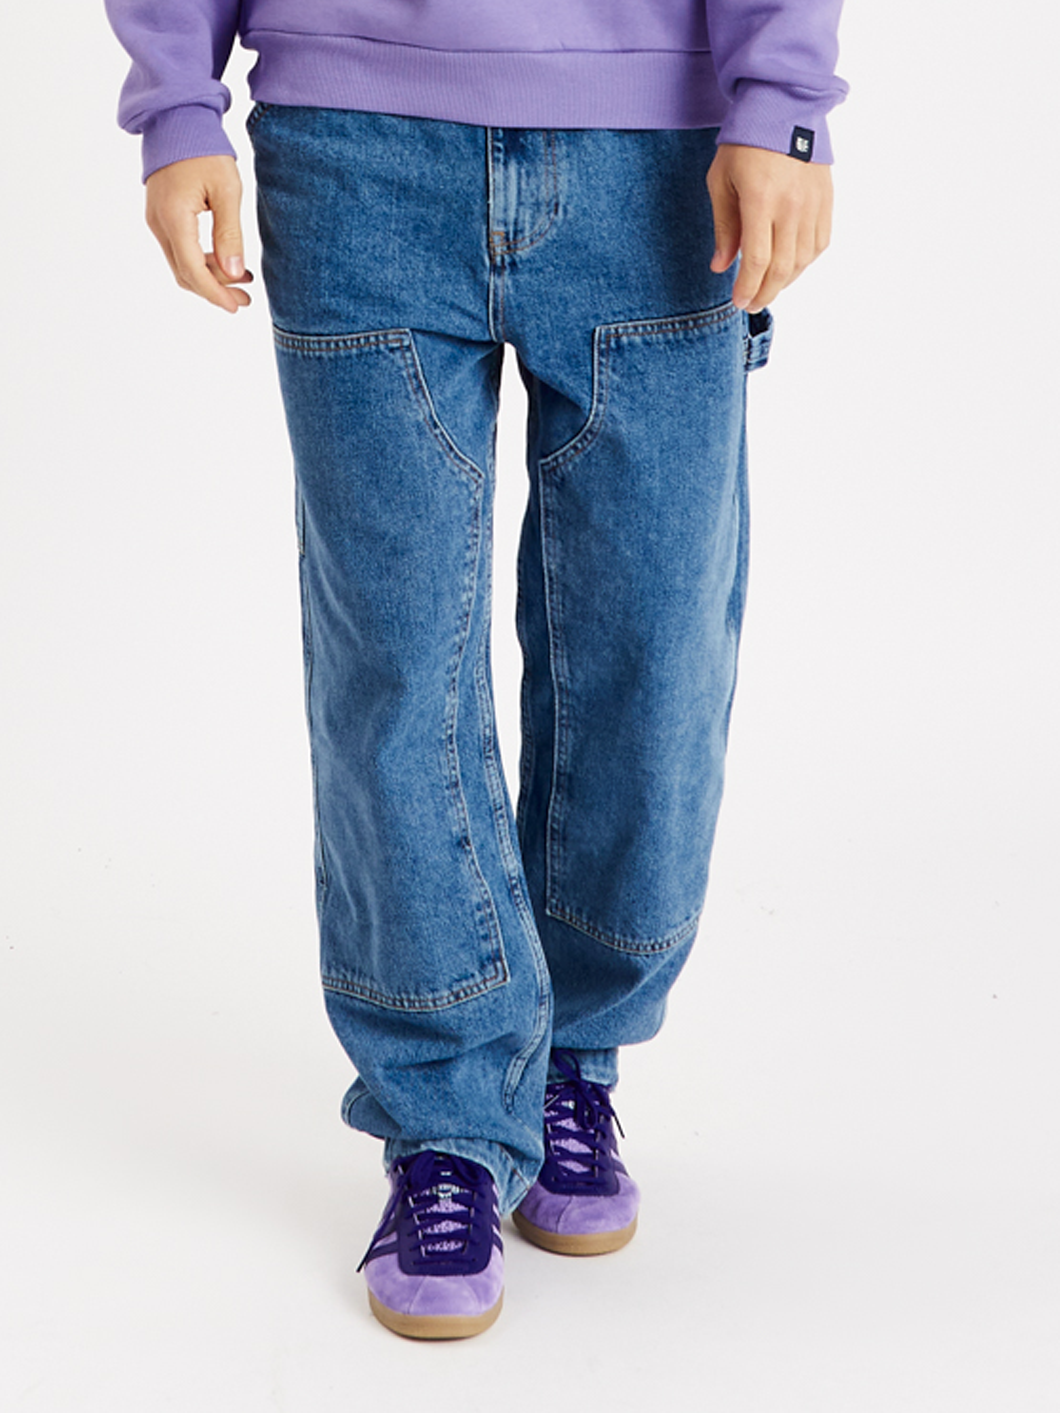 Buy Harper & Lewis Carpenter Denim Jeans from the Laura Ashley online shop